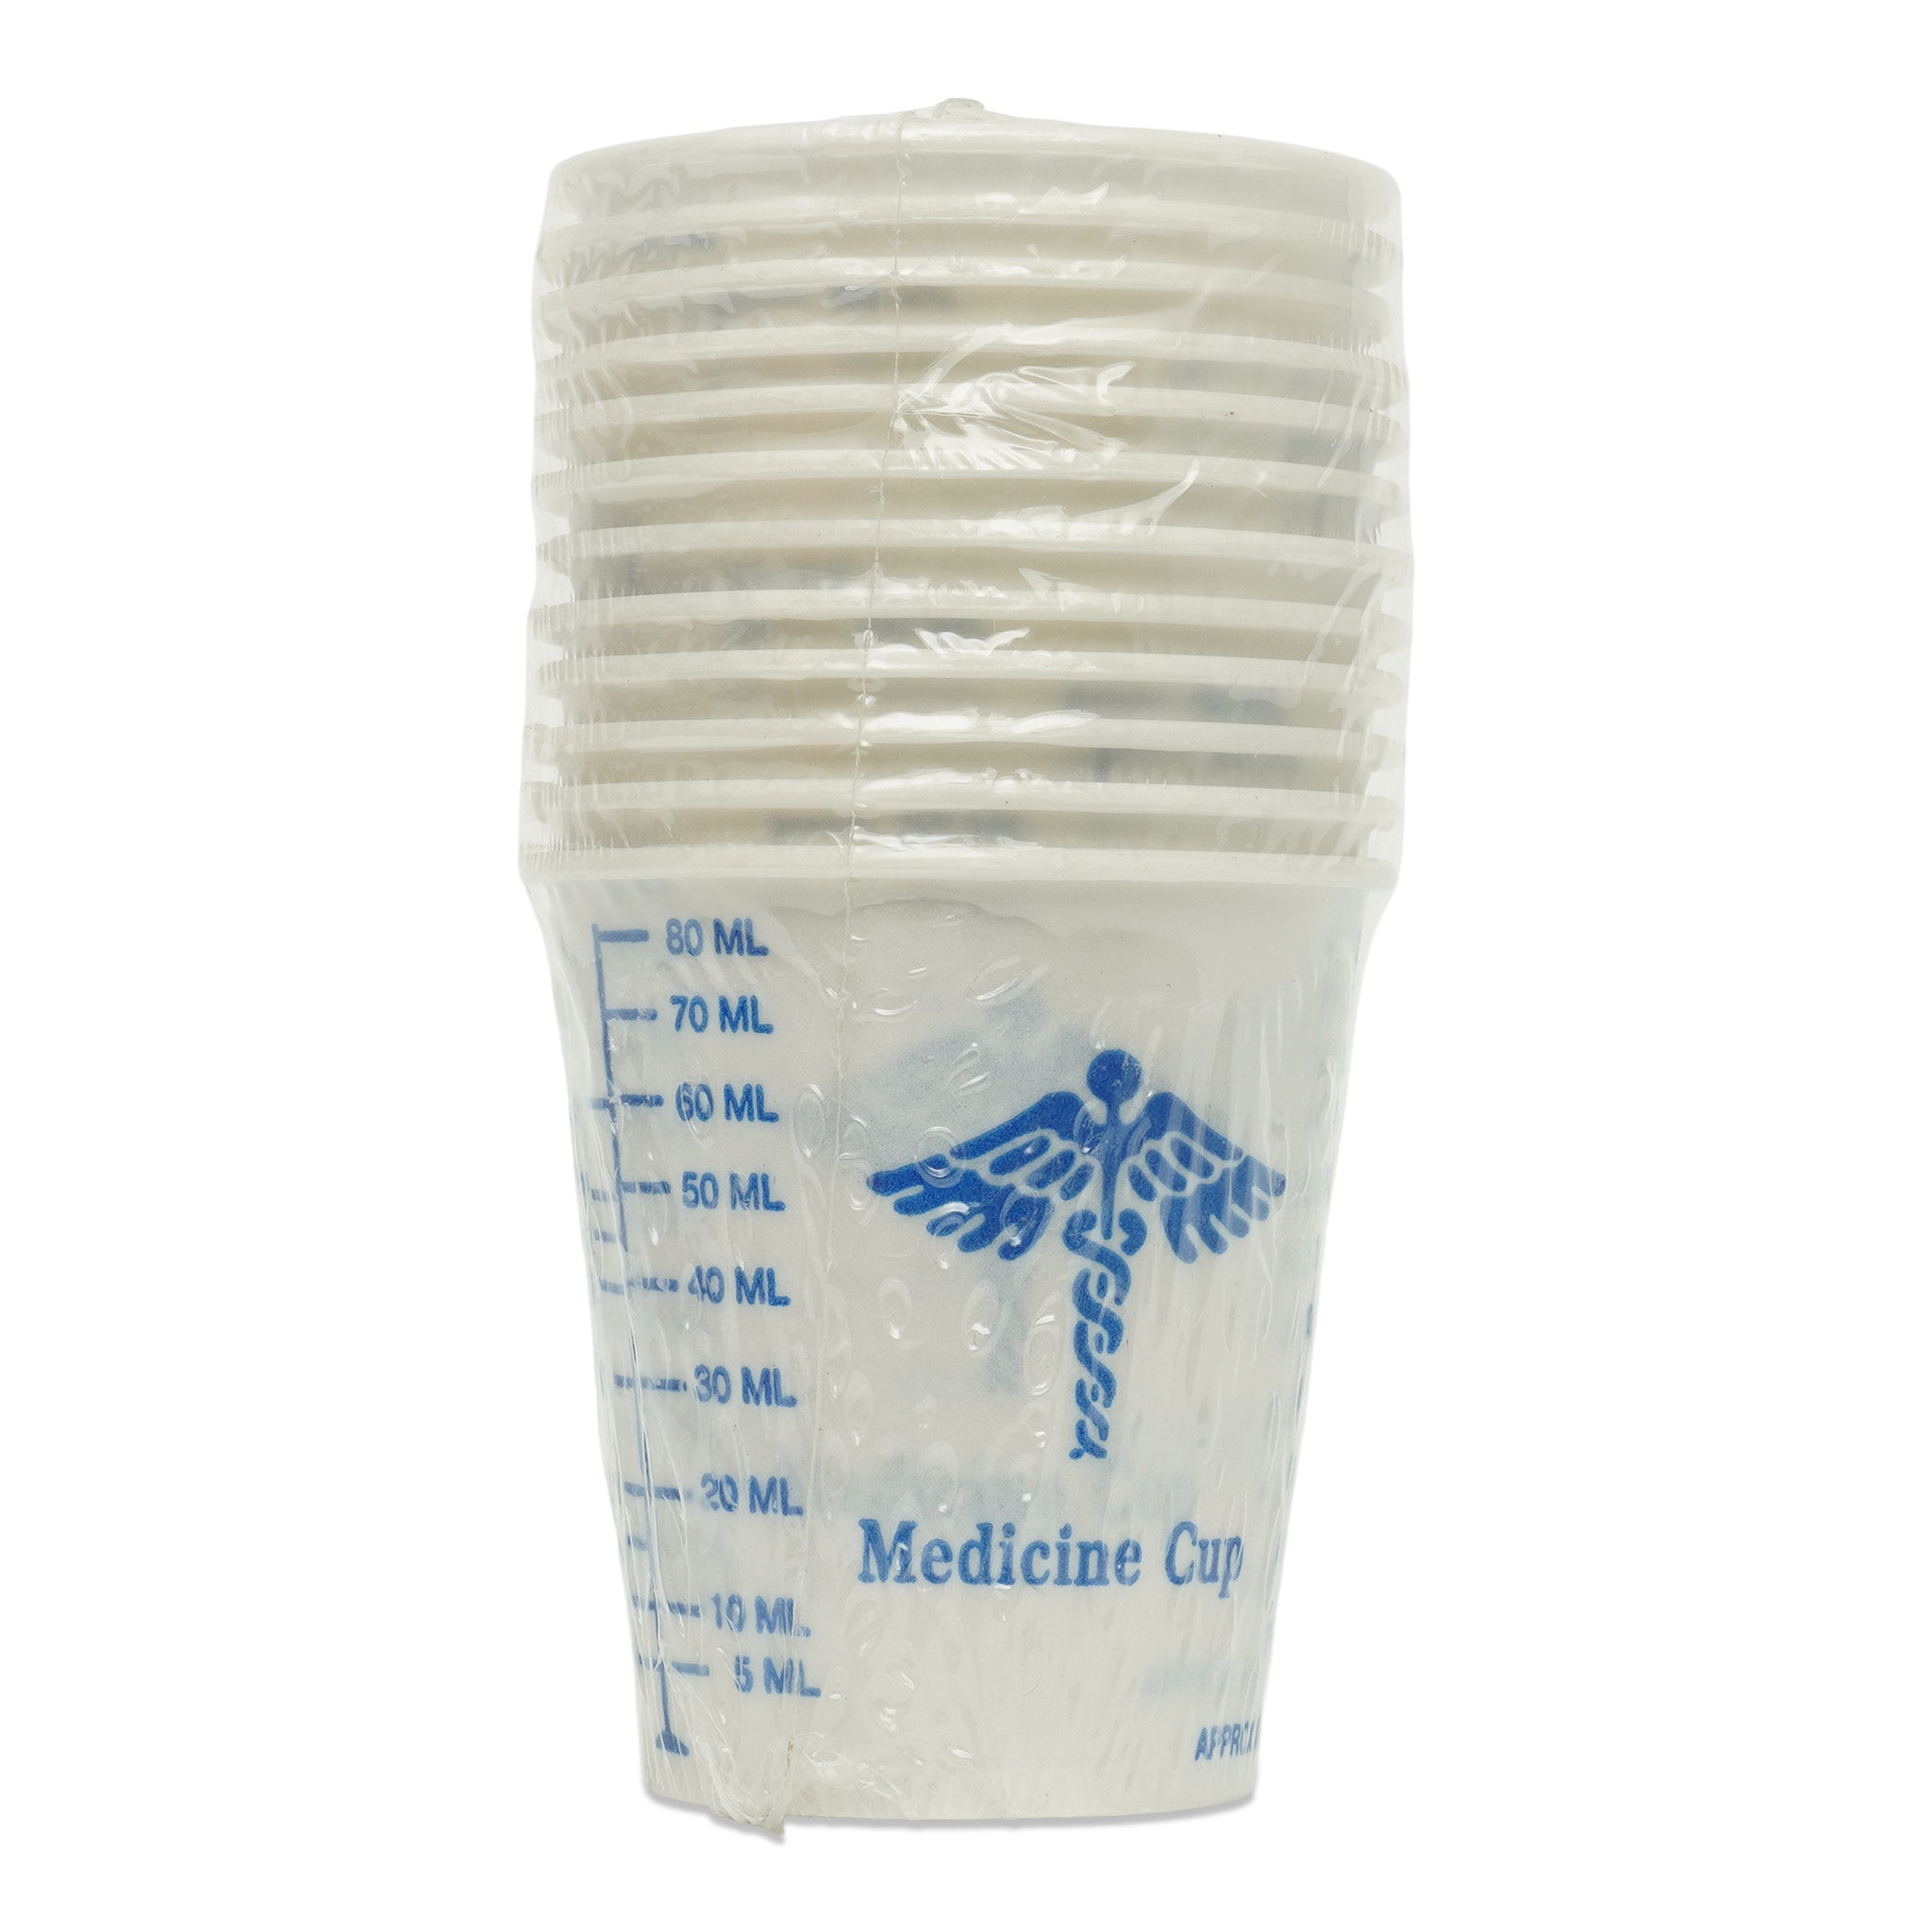 Solo Plastic Cups, 3 oz - 80 cups